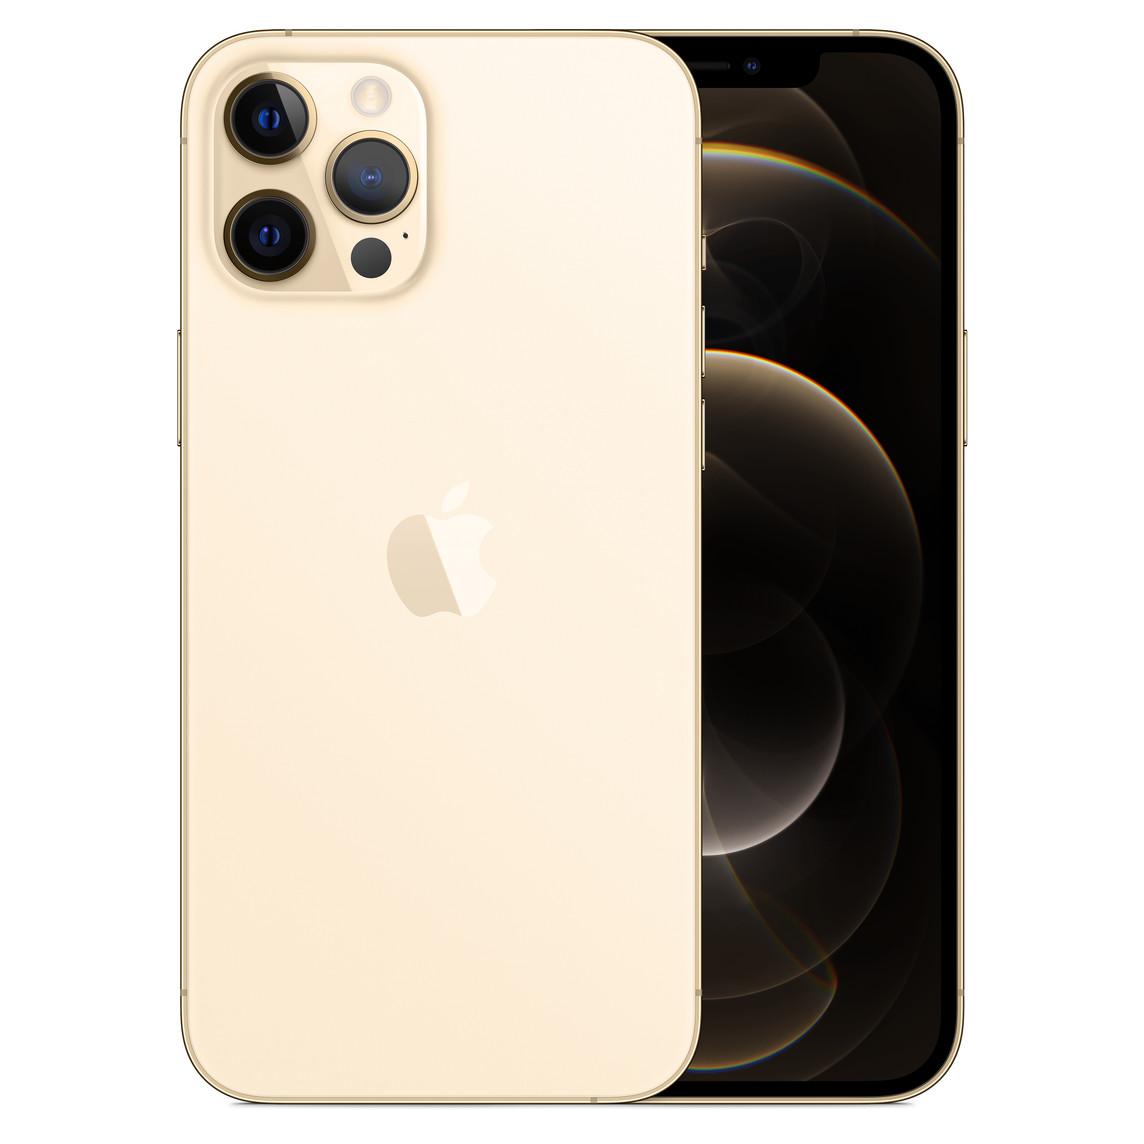 Goudkleurige iPhone 12 Pro Max, pro-camerasysteem met True Tone Flash, LiDAR, microfoon, Apple logo in het midden. Voorkant, all-screendisplay